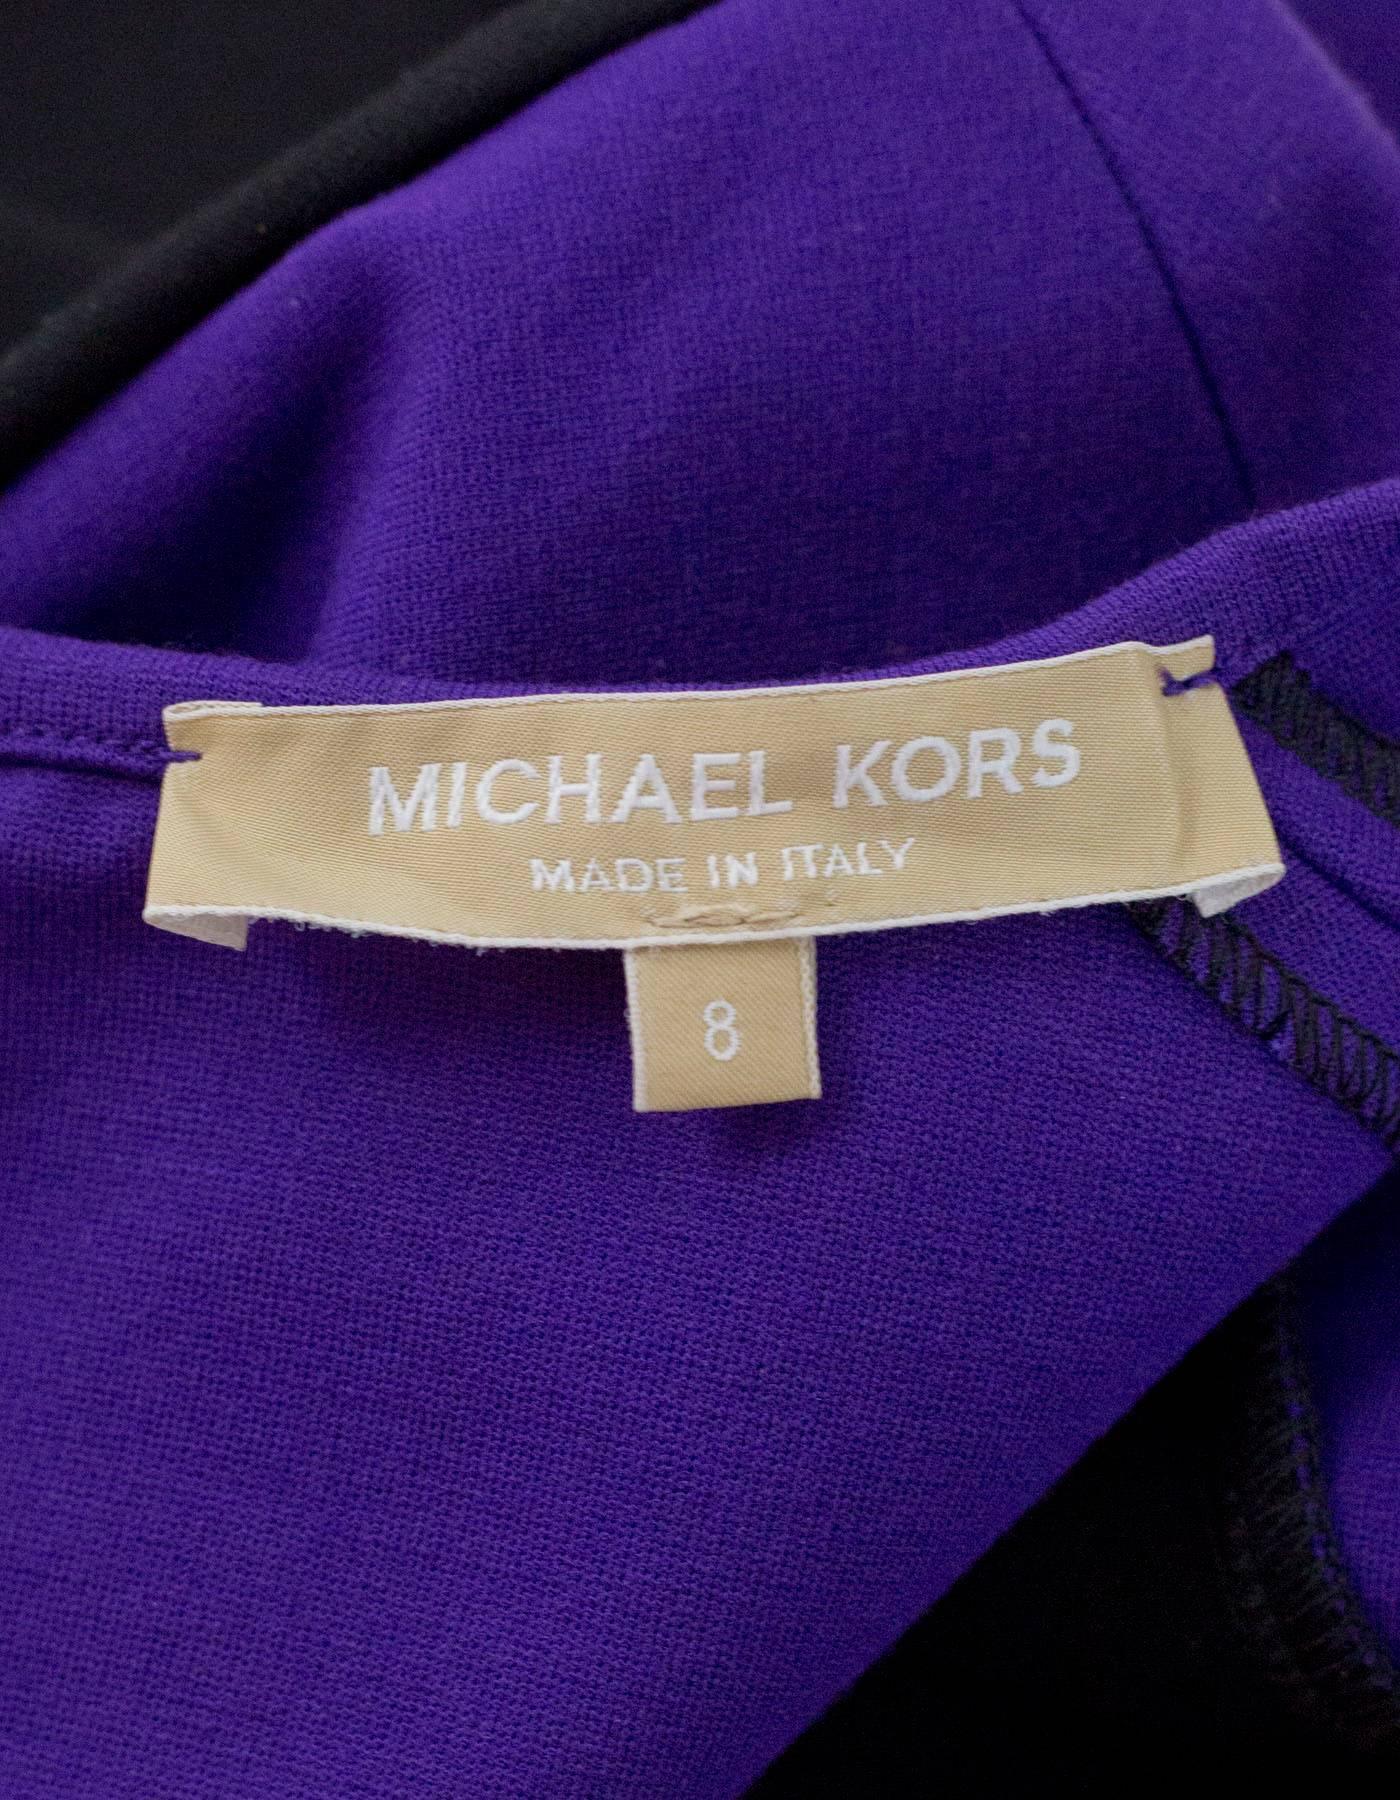 Michael Kors Purple & Black Sheath Dress sz US8 1